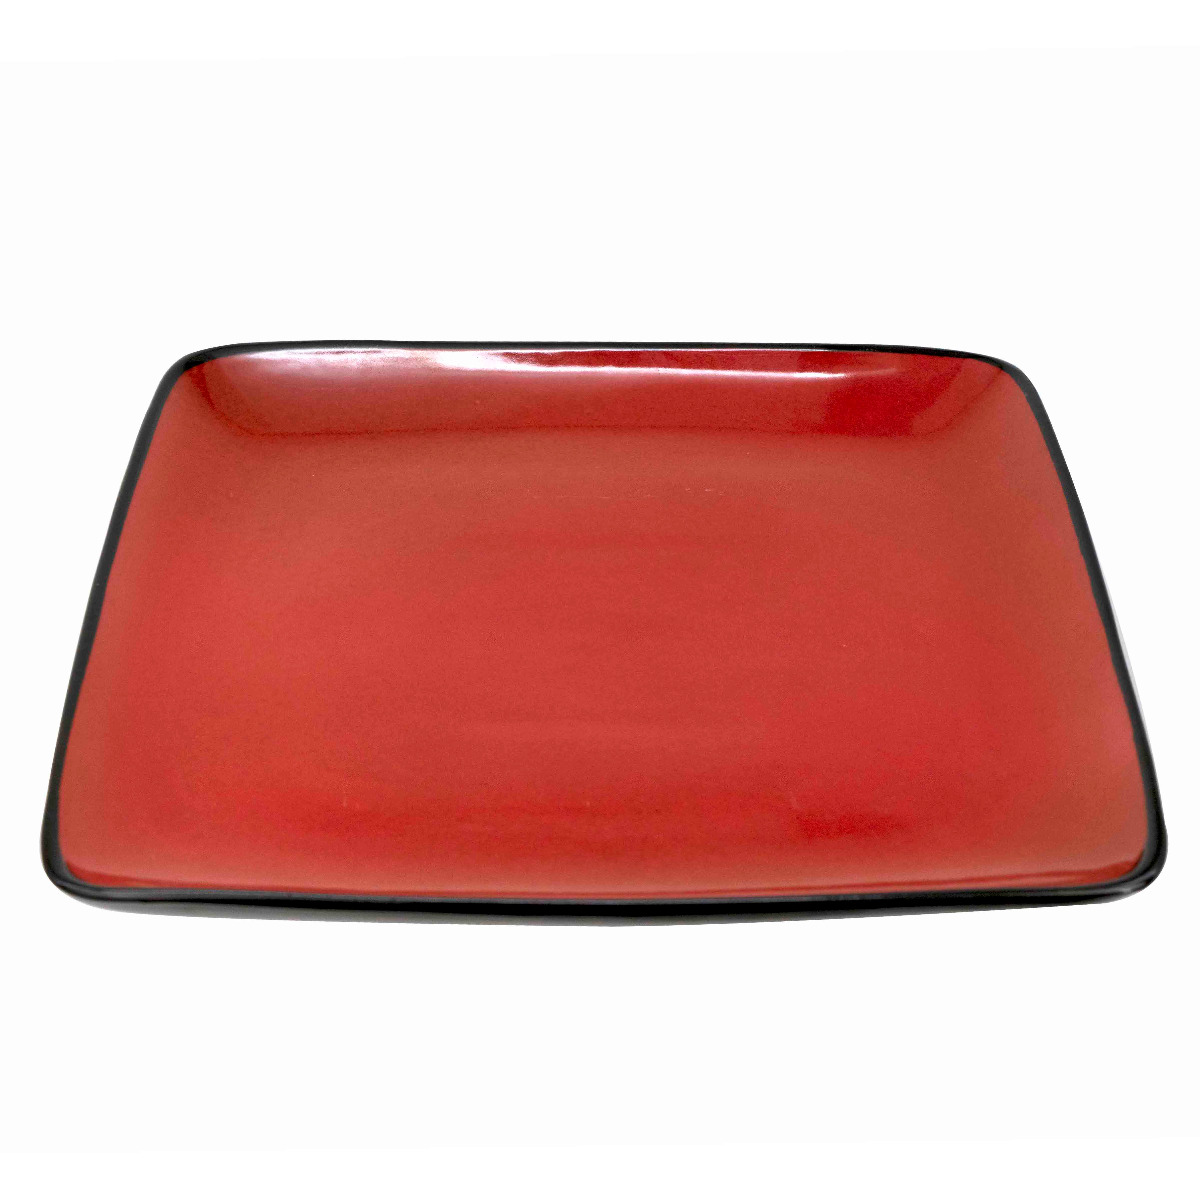 Ceramic serving plate 27cm-KR011706